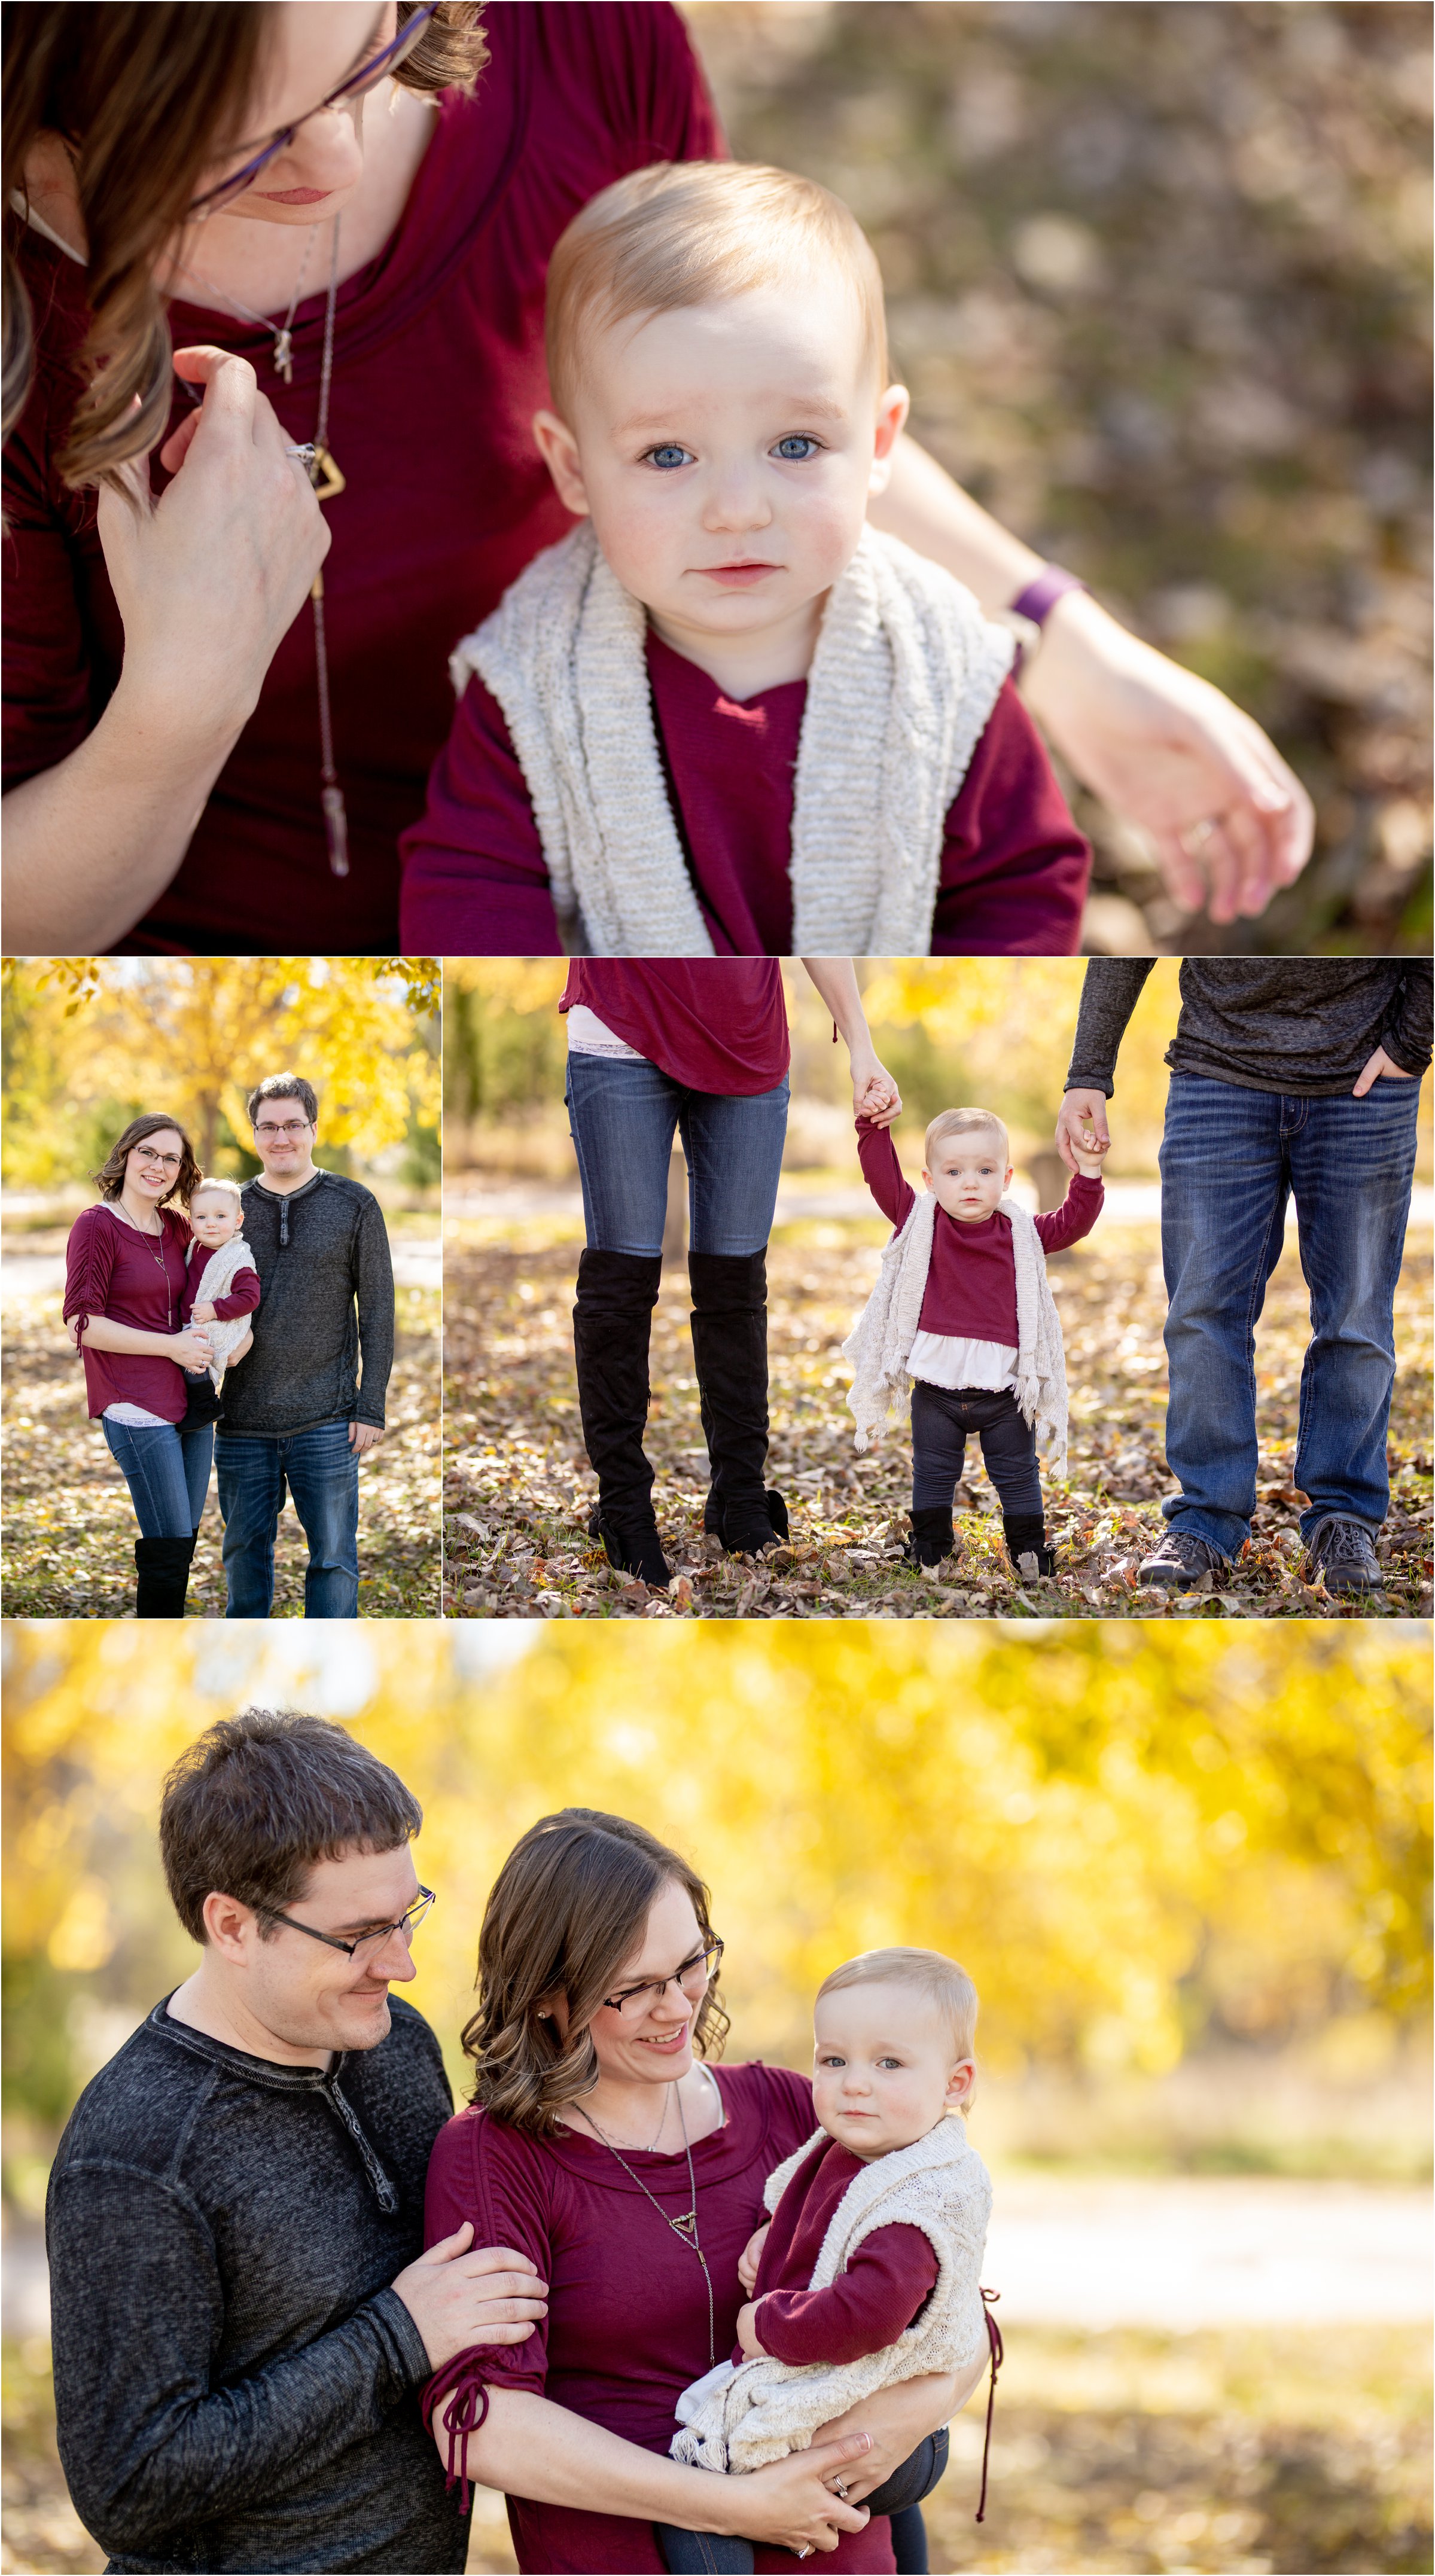 Holdrege and Kearney, Nebraska Family Session by Greeley, Colorado Portrait and Wedding Photographer